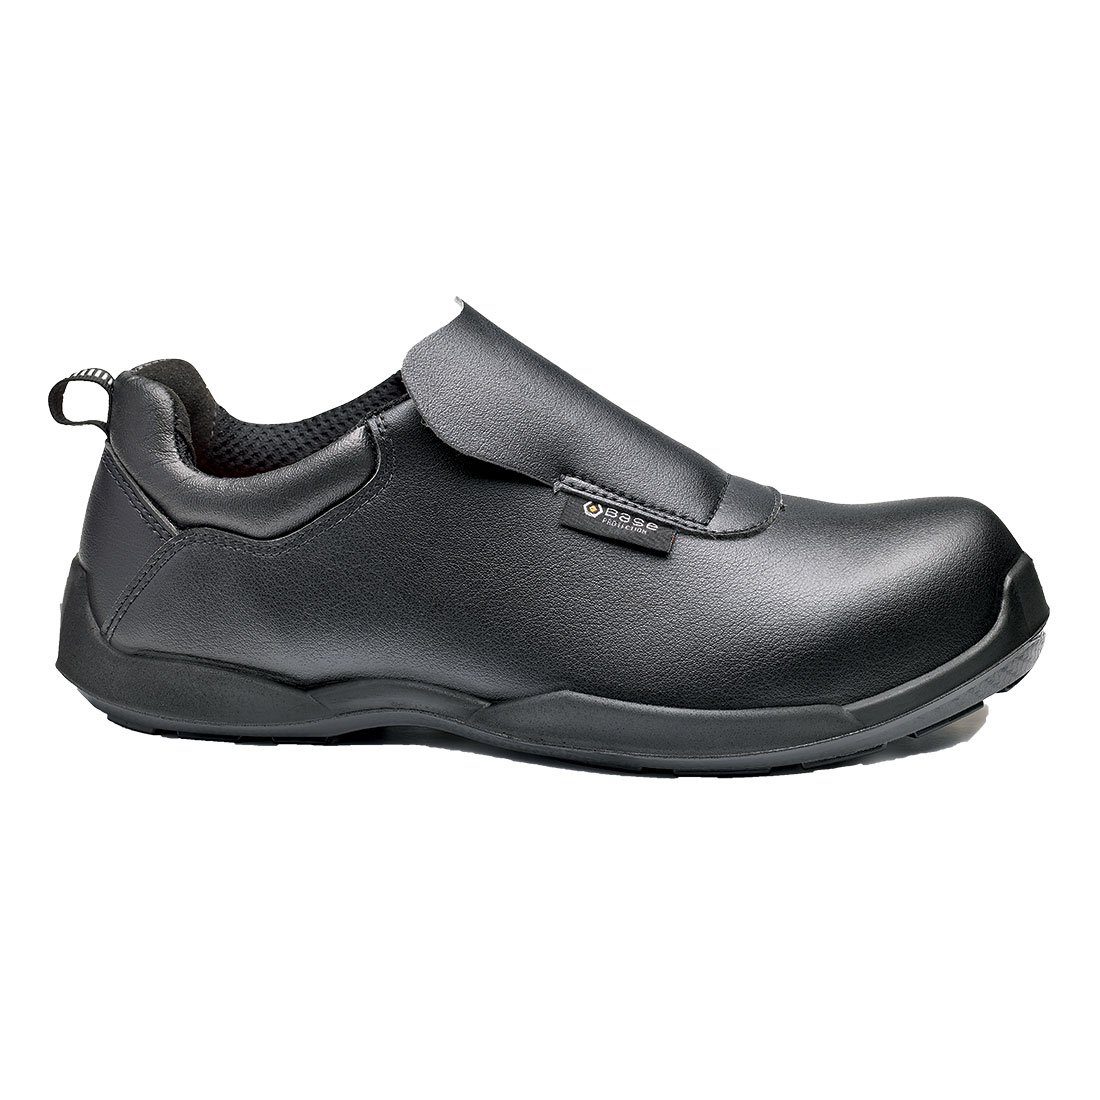 Base Footwear Sicherheitsschuhe B0696 - Cooking S2 SRC - Küchenschuh Schutzkappe Sicherheitsschuh Rutschfest, metallfrei, Zehenschutz 200 Joule, wasserdicht